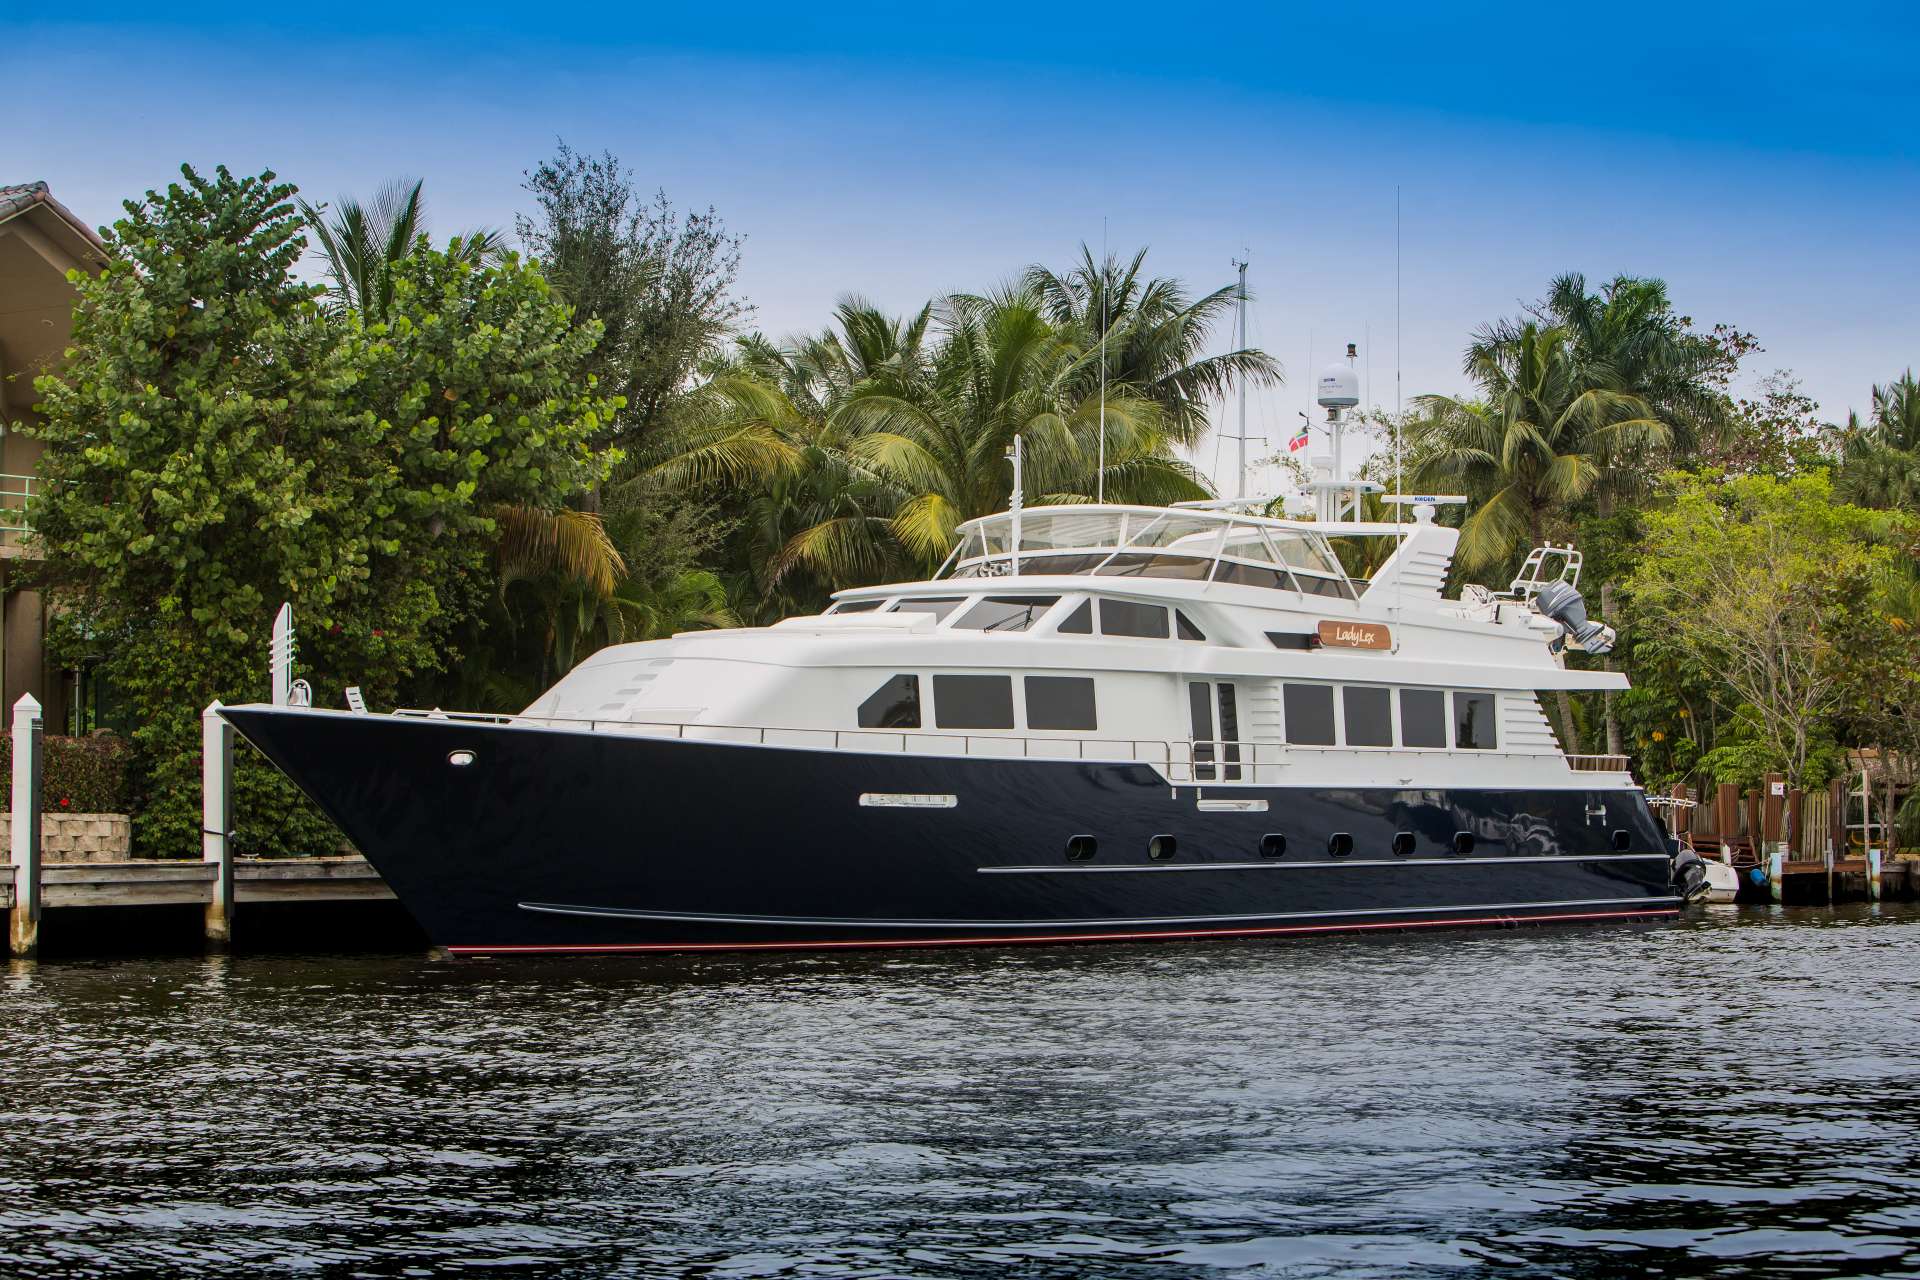 Lady Lex Luxury Broward 100 Yacht Charter Cruising the Bahamas and New England.